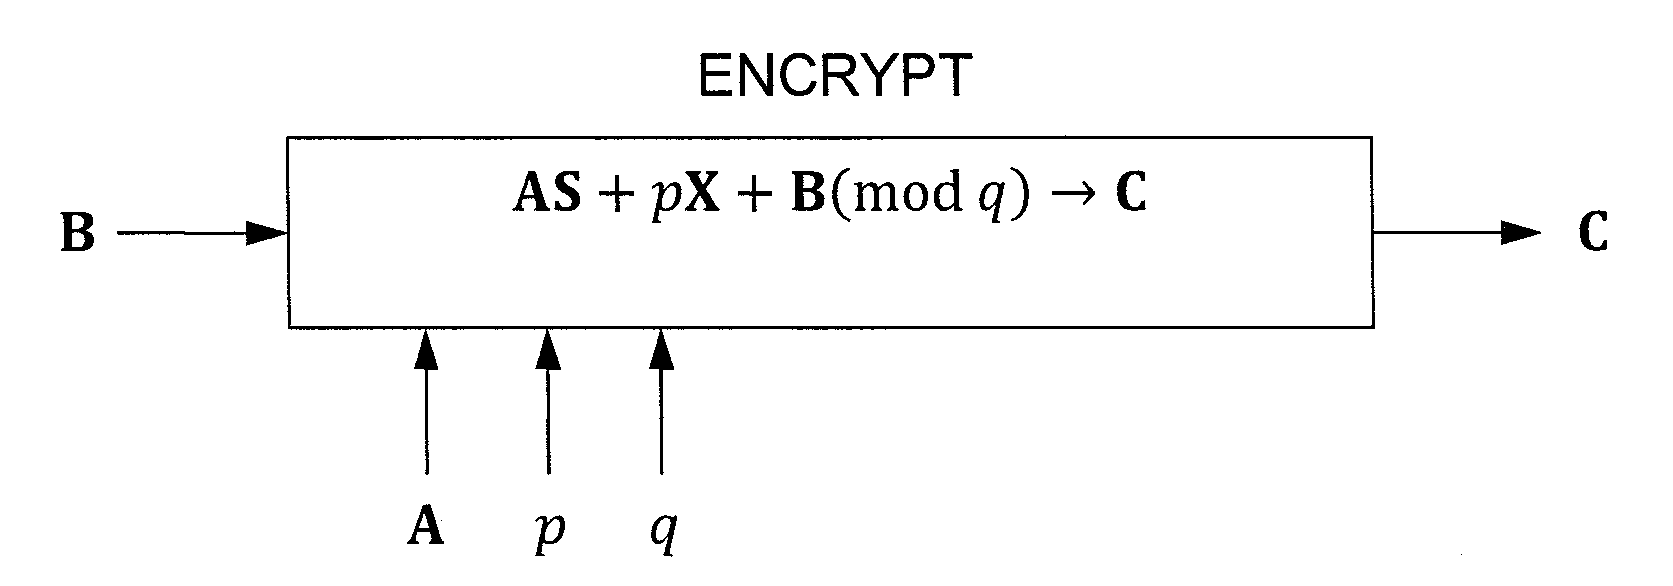 Efficient Homomorphic Encryption Scheme For Bilinear Forms